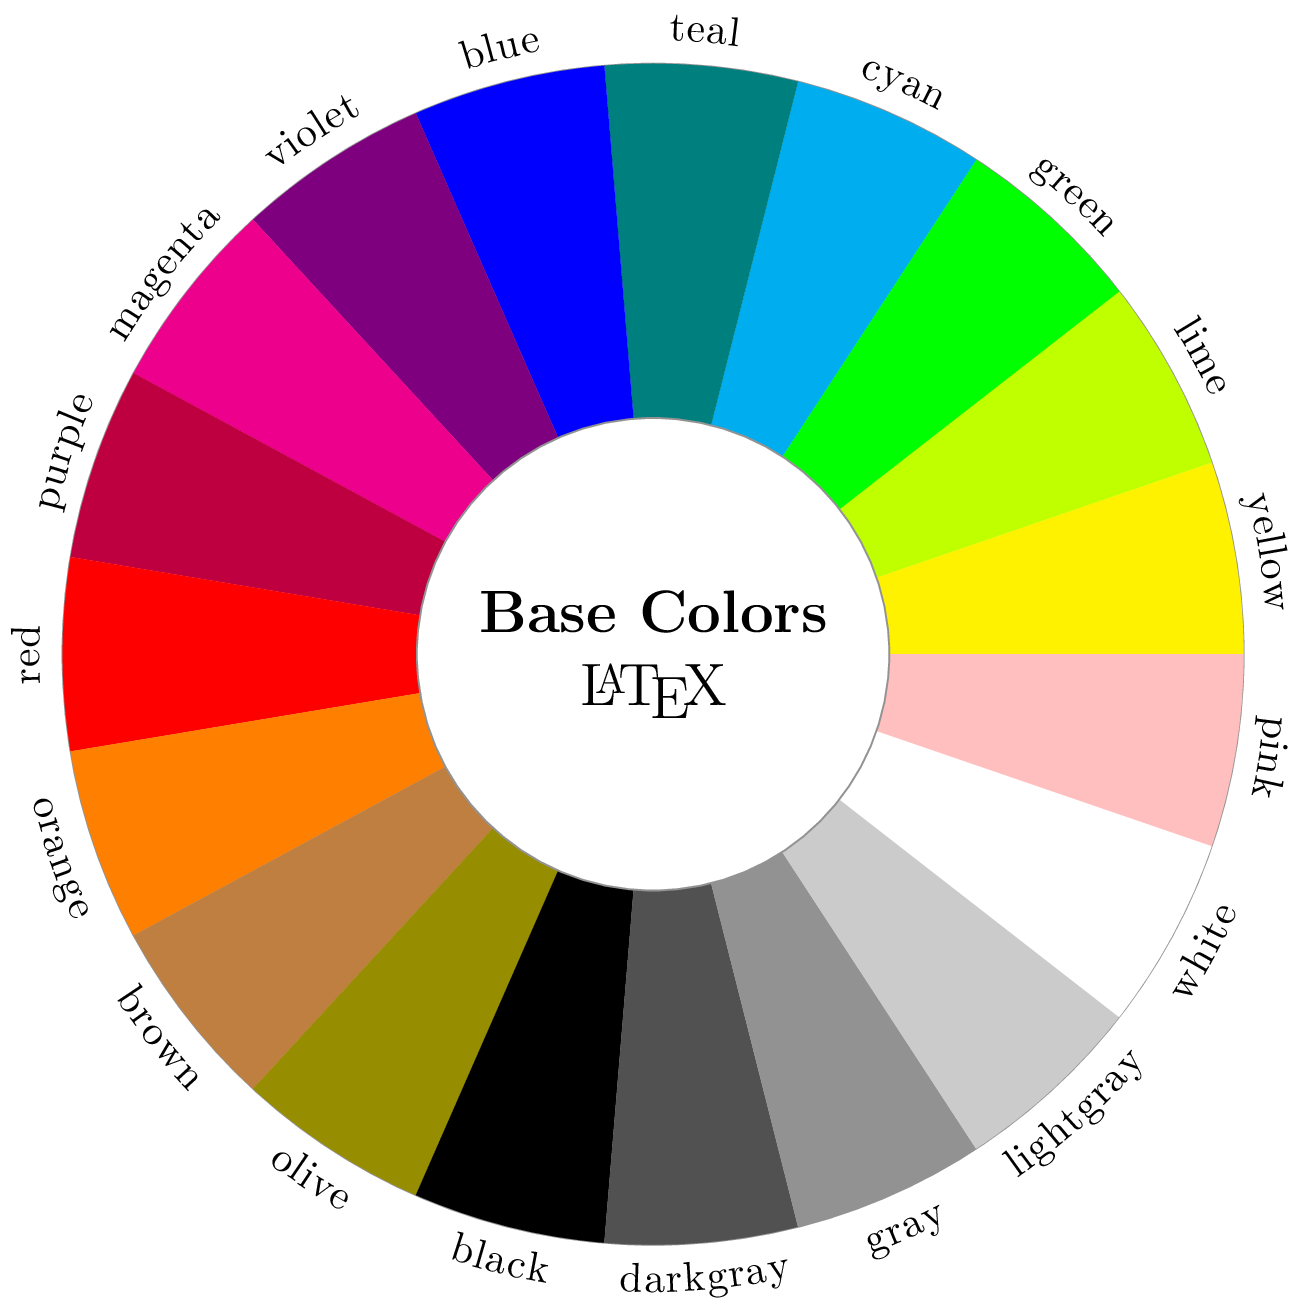 Base Colors Latex